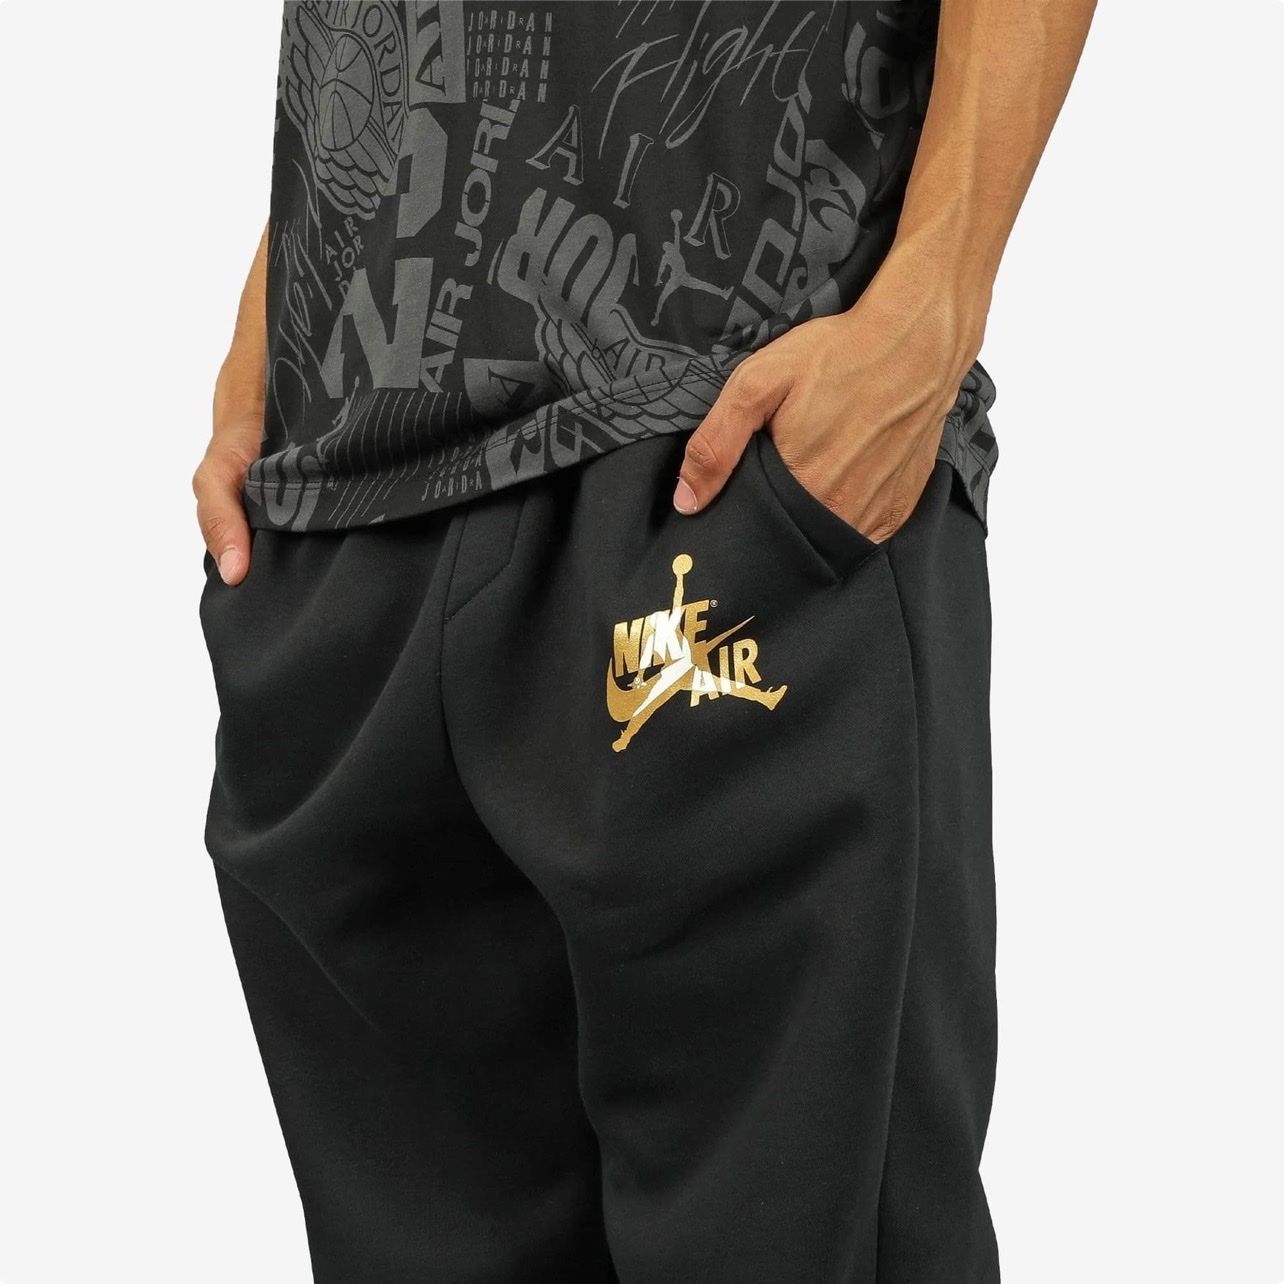  Jordan Jumpman Classic Fleece Pants - Black/Gold 